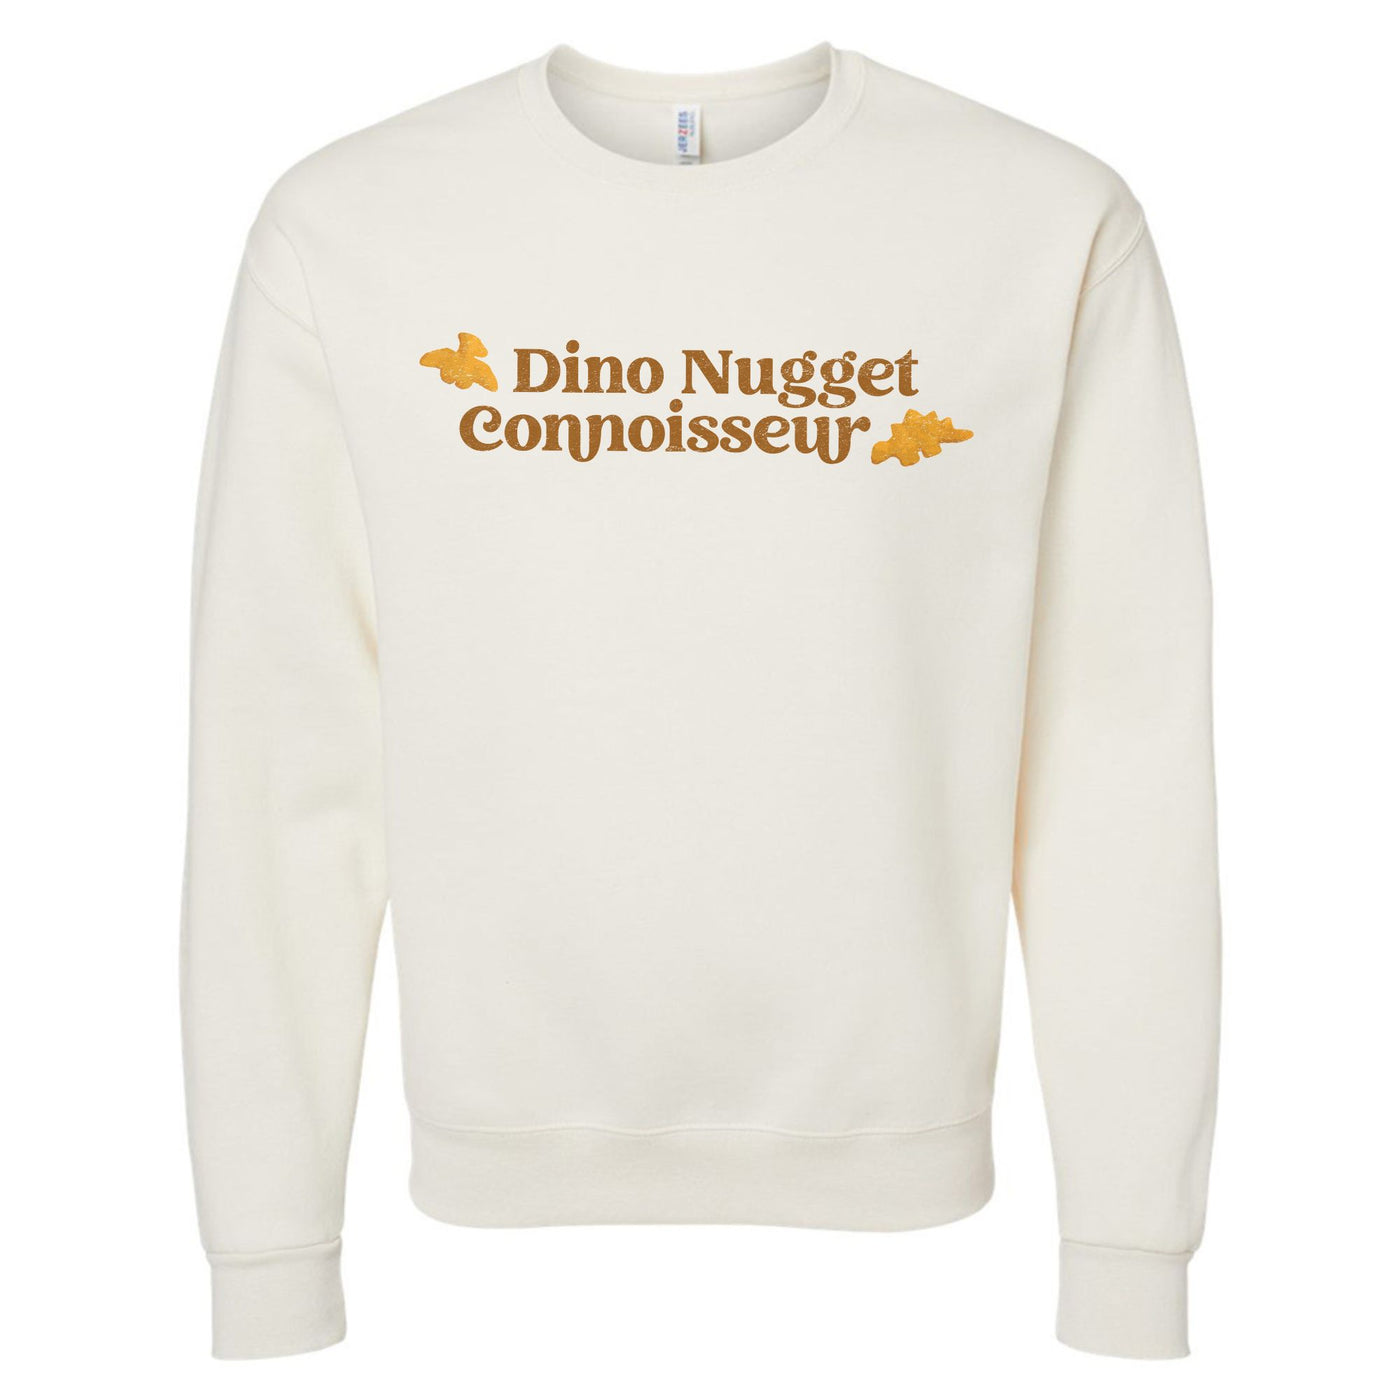 'Dino Nugget Connoisseur' Crewneck Sweatshirt